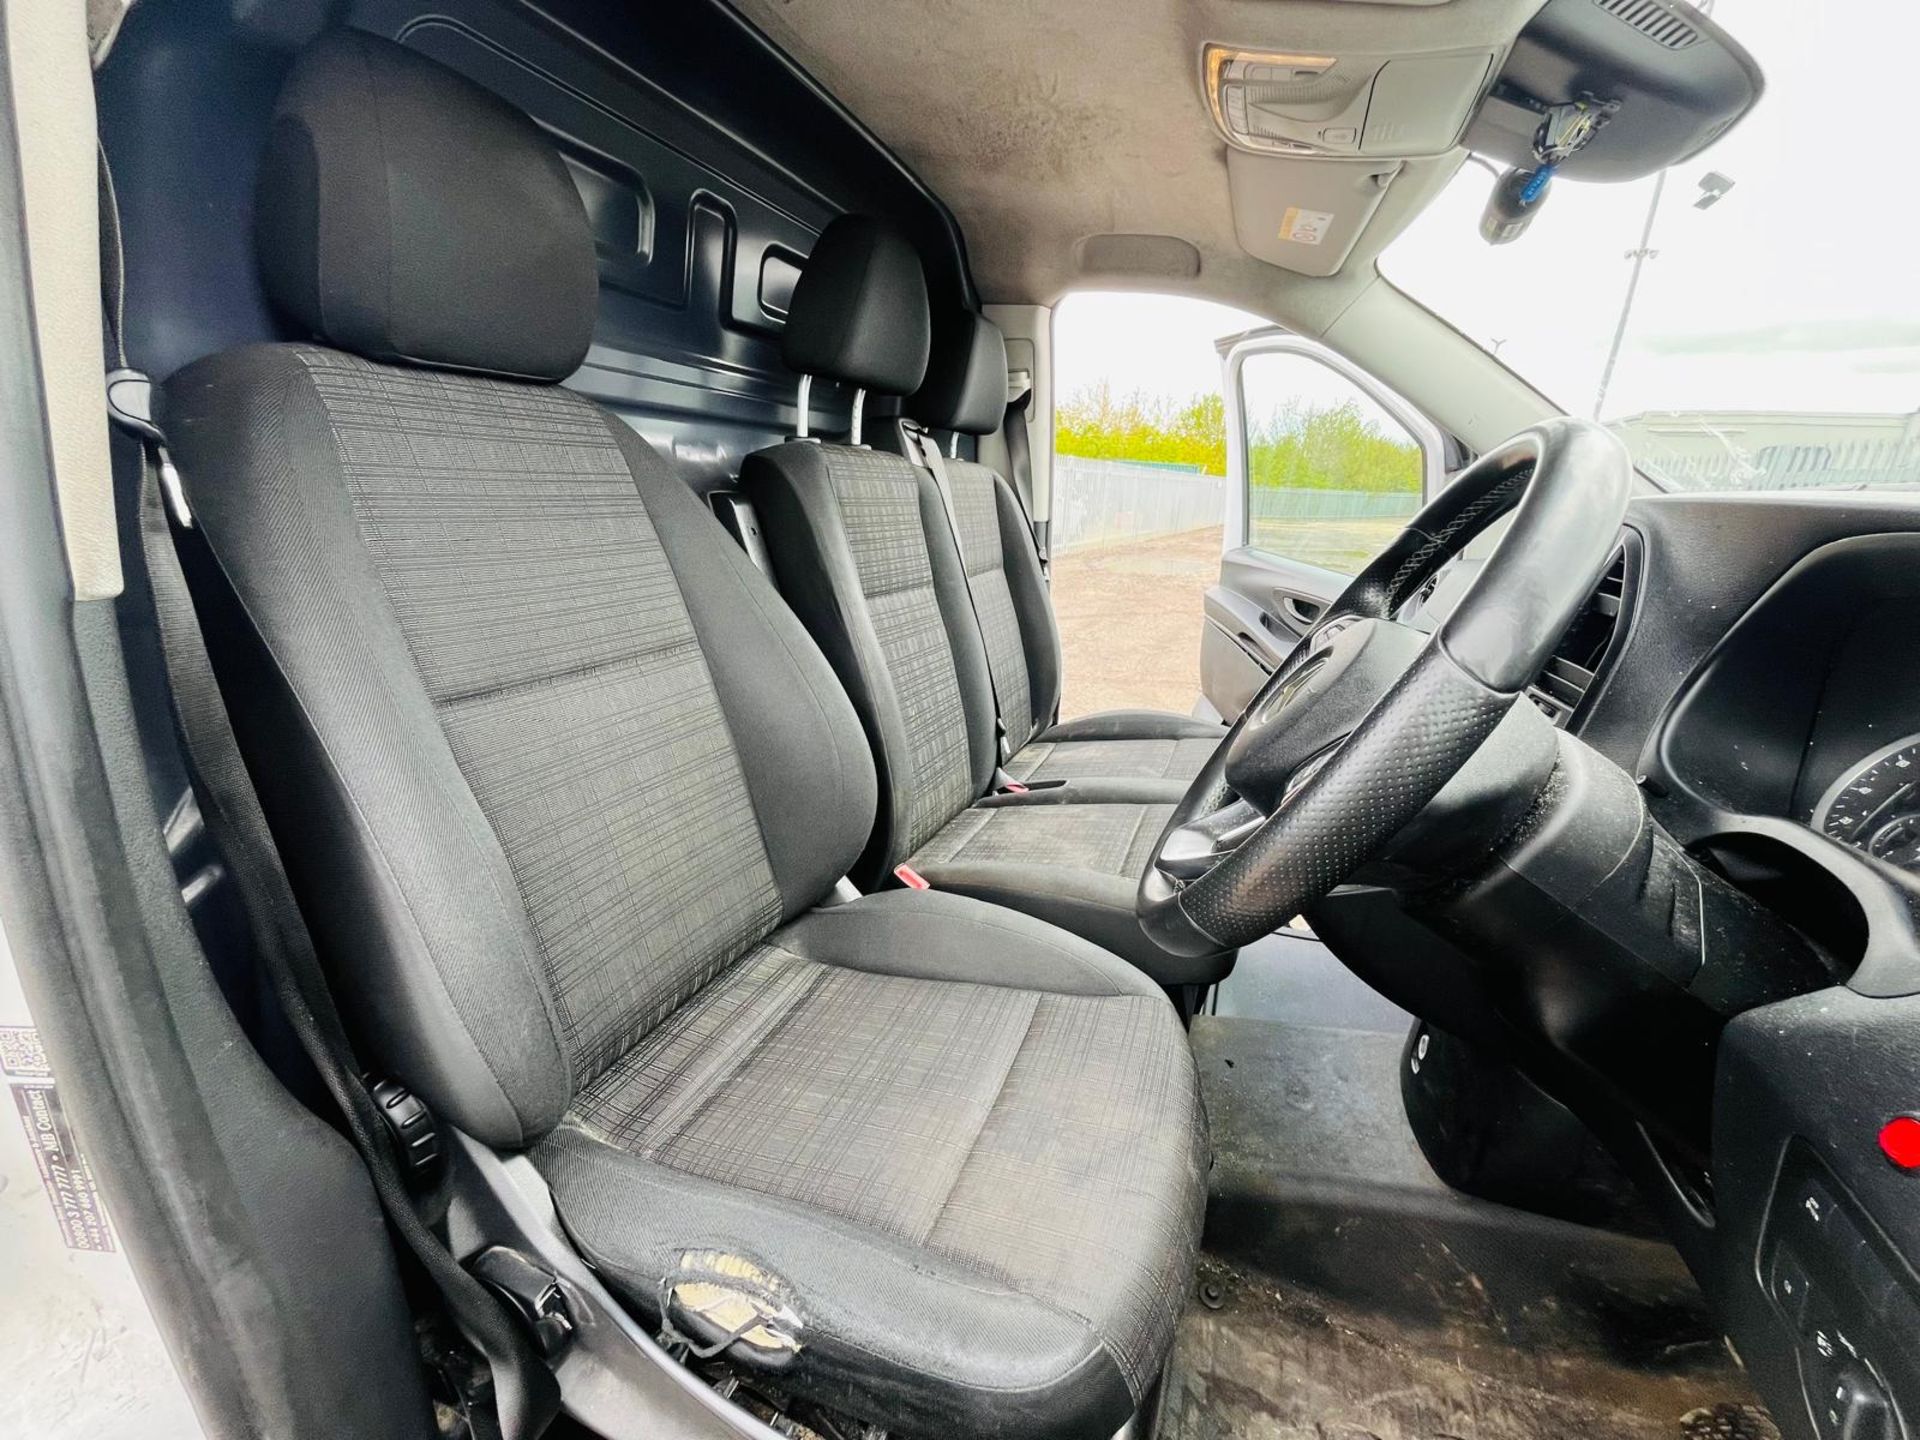 Mercedes Benz Vito 114 CDI RWD Fridge/Freezer 2.1 2019 '19 Reg '-ULEZ Compliant-Parking Sensors-A/C - Image 17 of 27